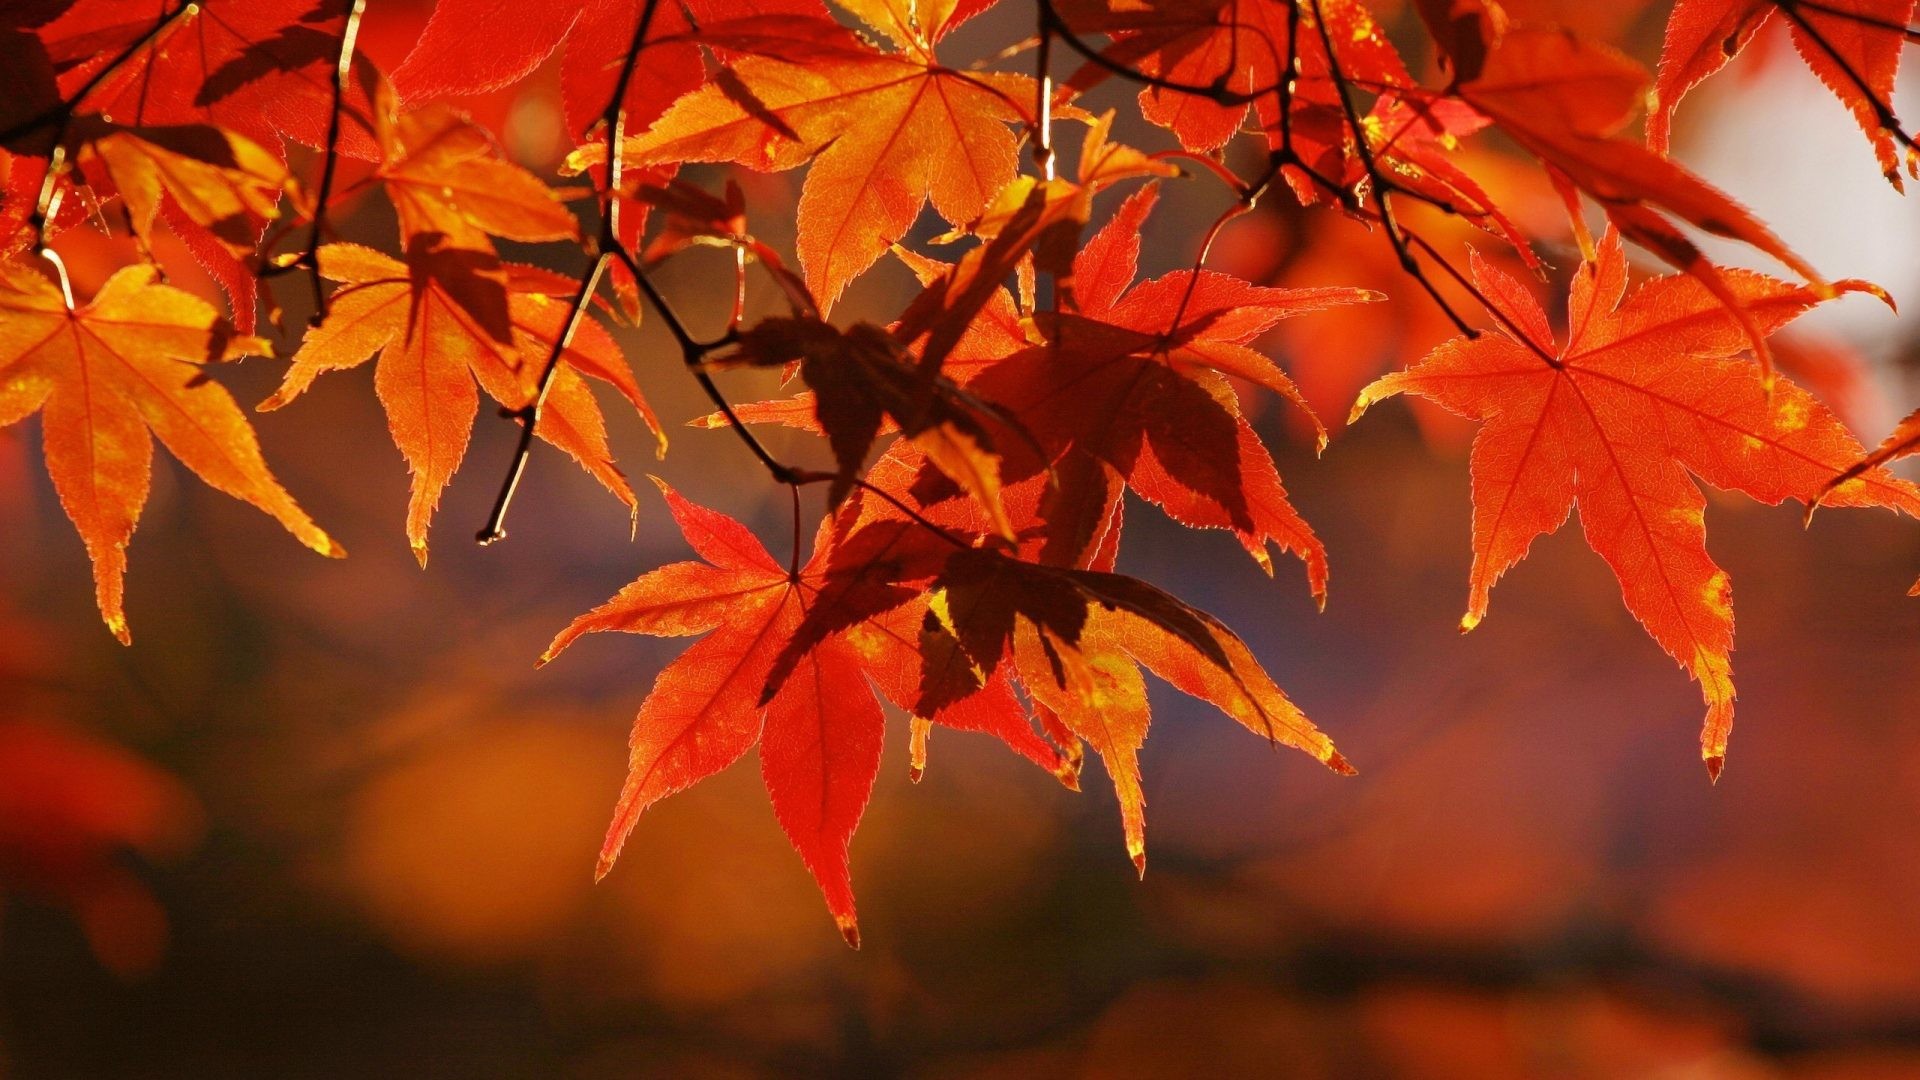 1920x1080 Leaves Tag - Fall Leaves Season Autumn Colors Tree Free Desktop Wallpaper  for HD 16: